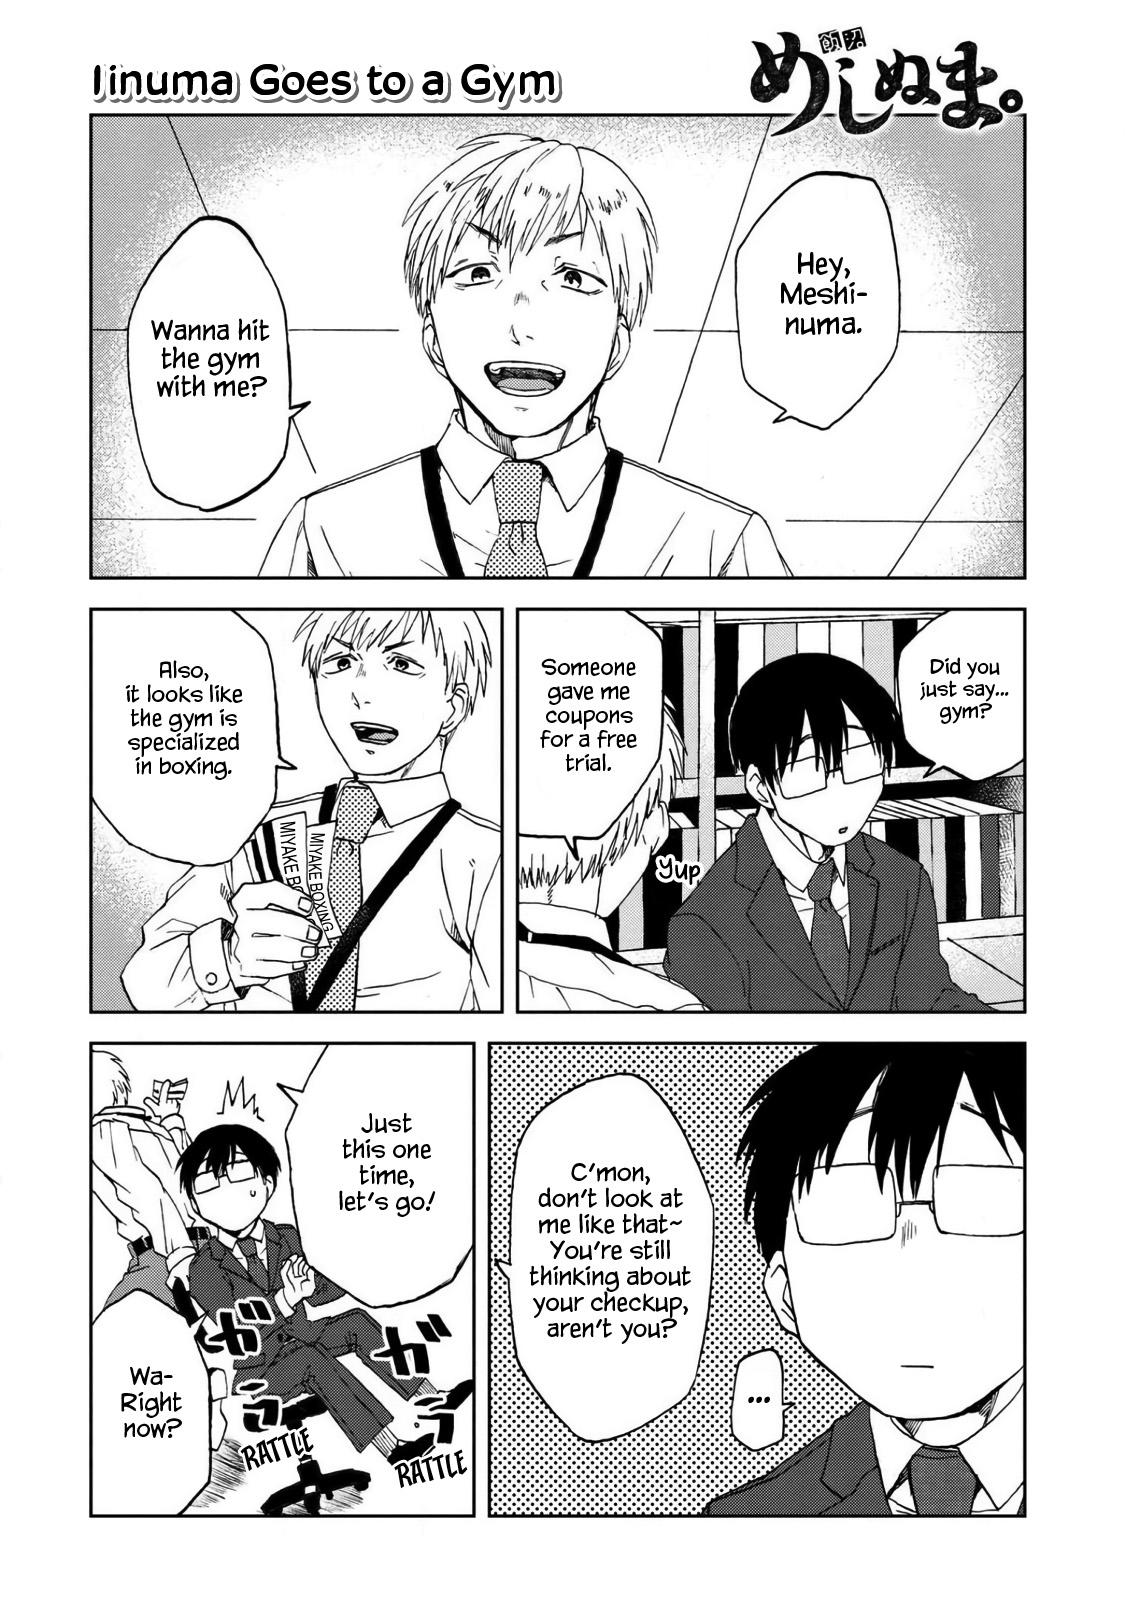 Love Gym Manga Chapter 1 Read Meshinuma Vol.4 Chapter 51.1: Iinuma Goes To A Gym on Mangakakalot